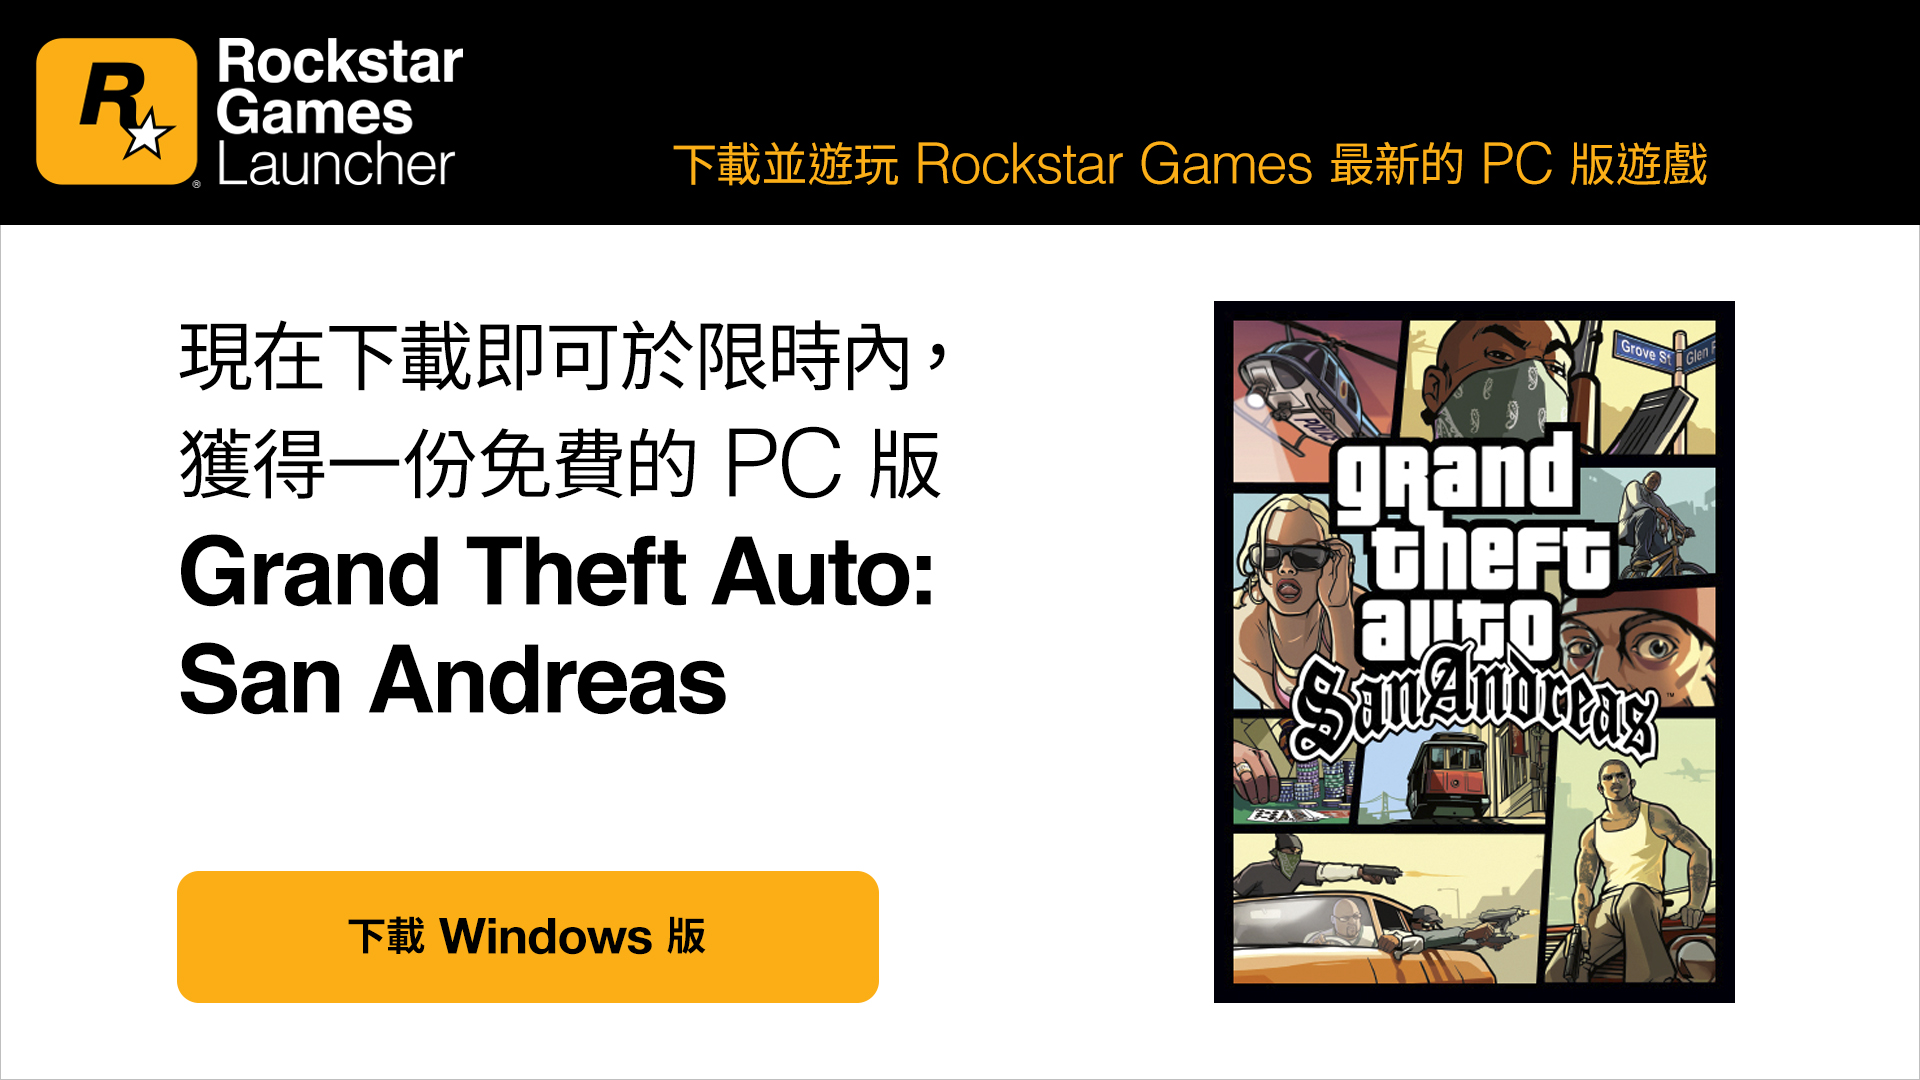 Rockstar Games Launcher 【R星平台】〔現在下載就送GTA聖安地列斯〕_Gamcka.jpg